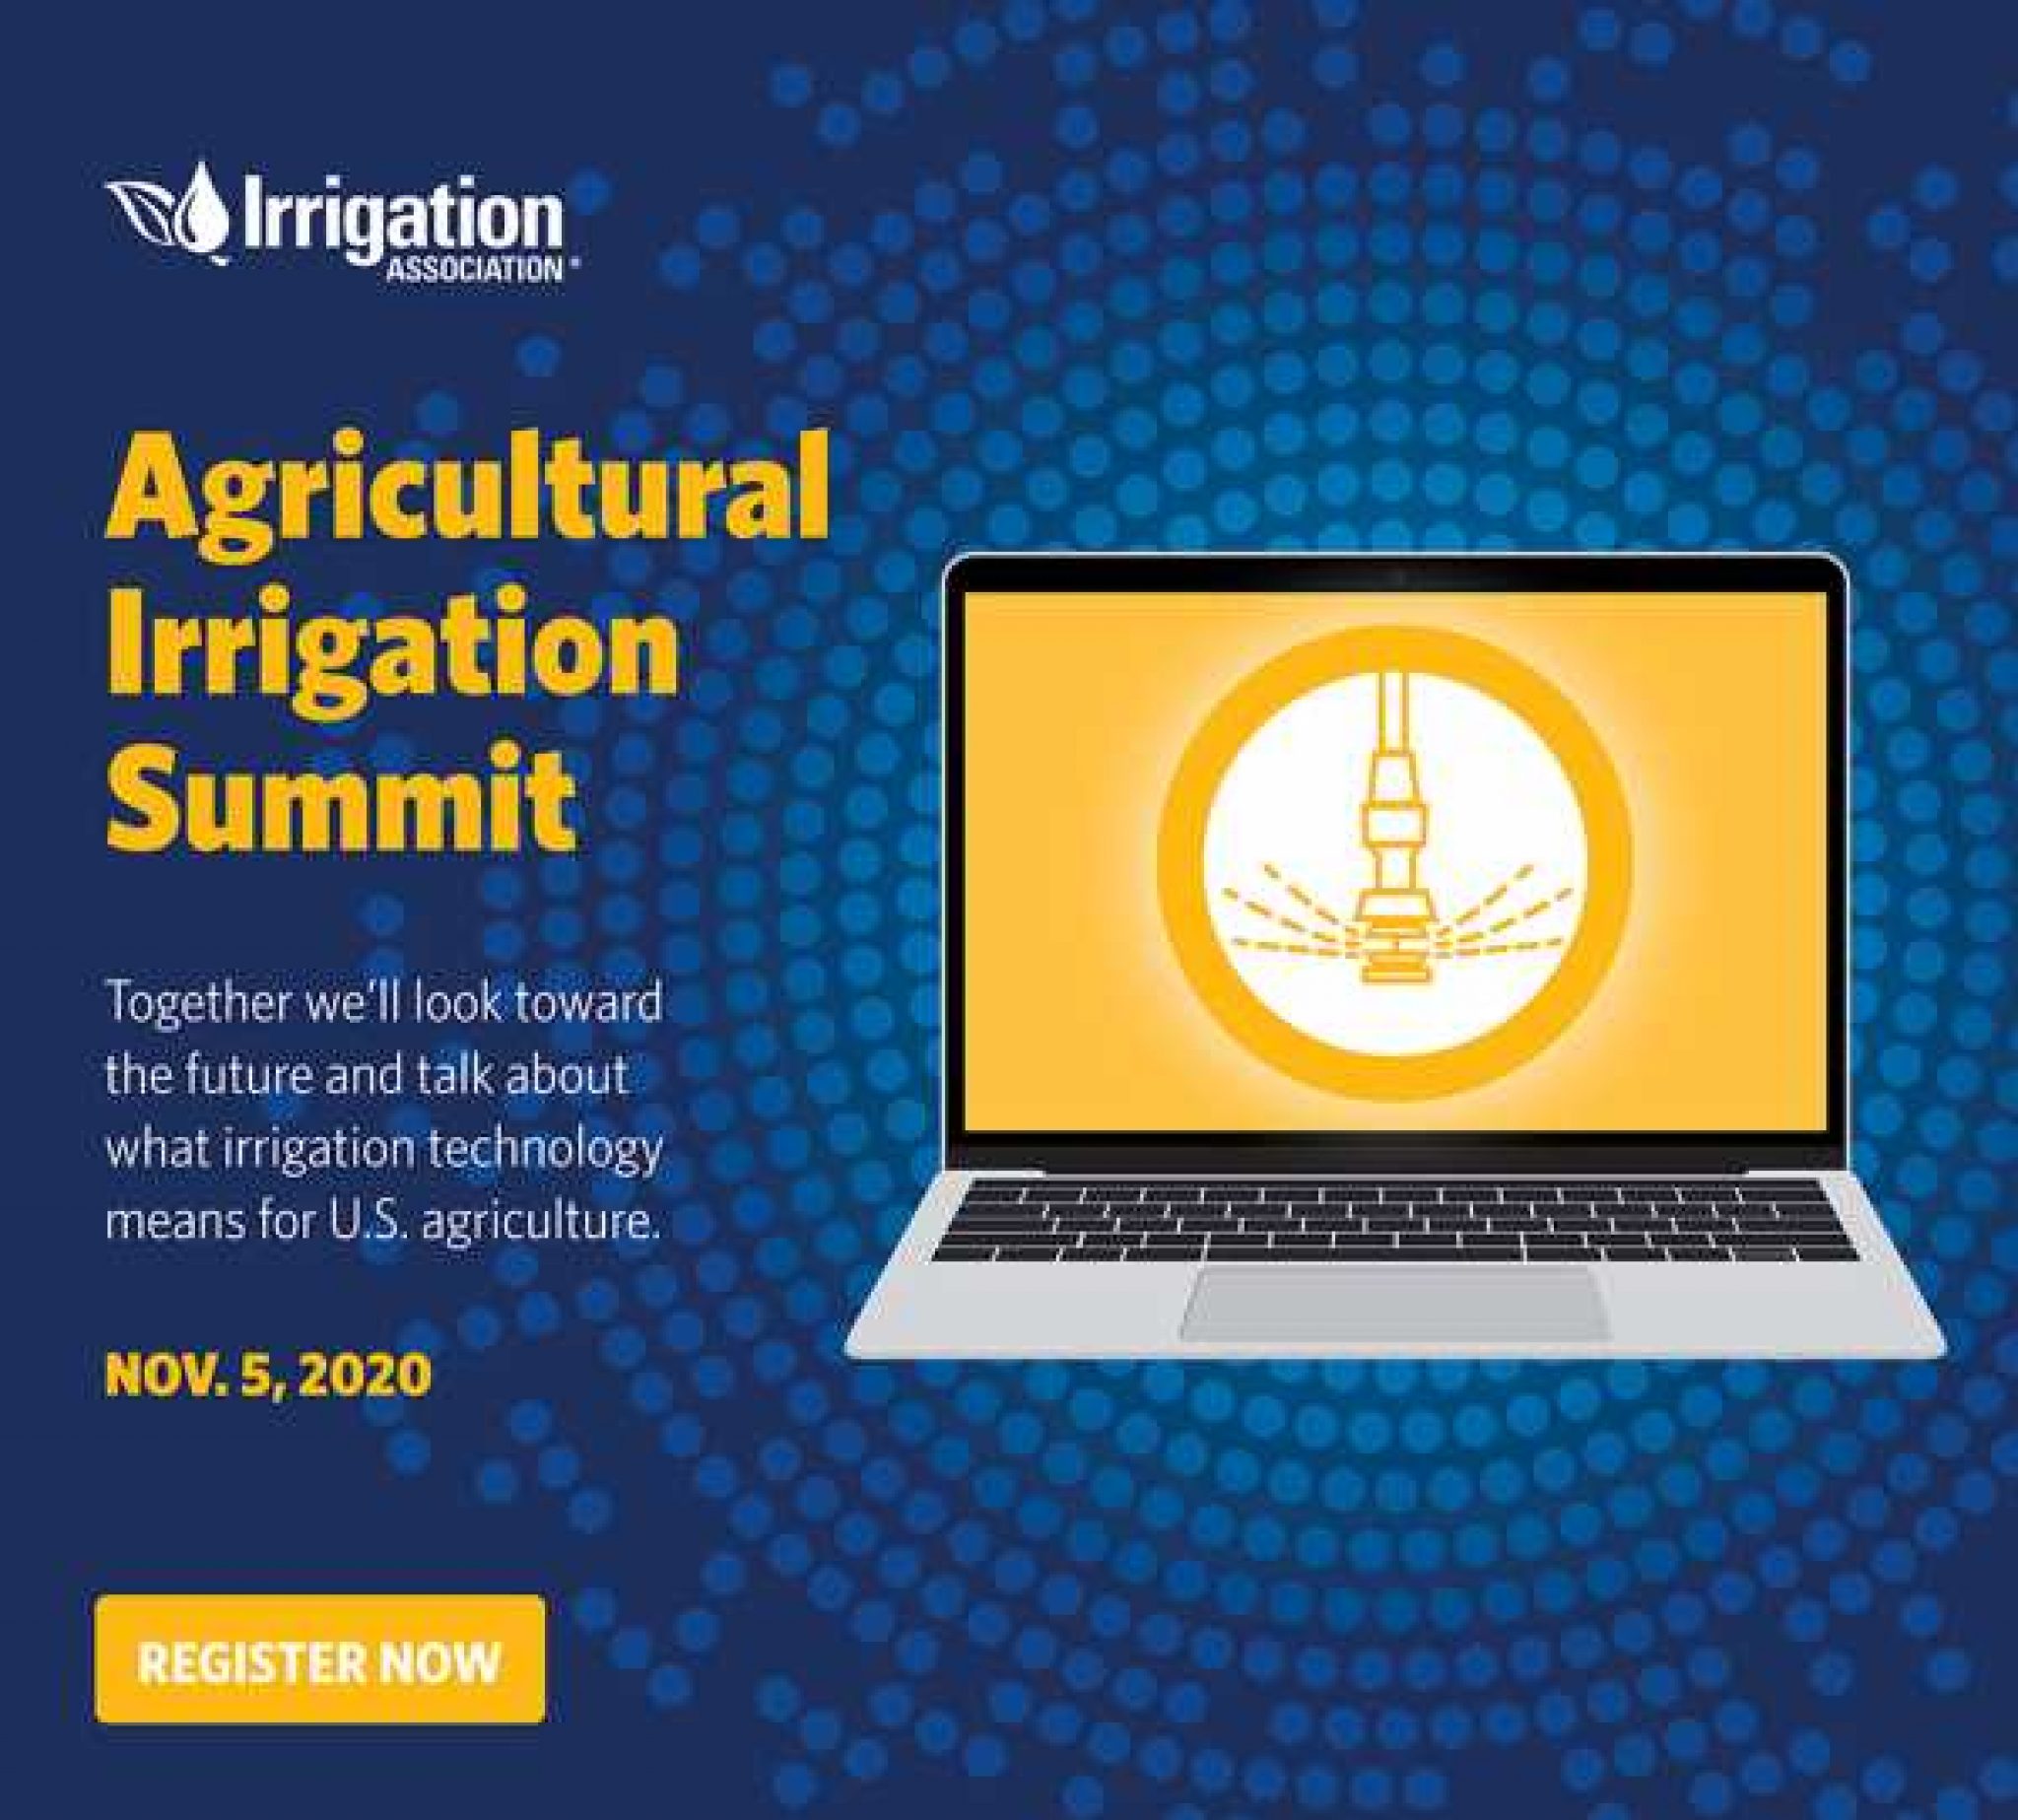 Irrigation Association hosts first virtual ag irrigation summit